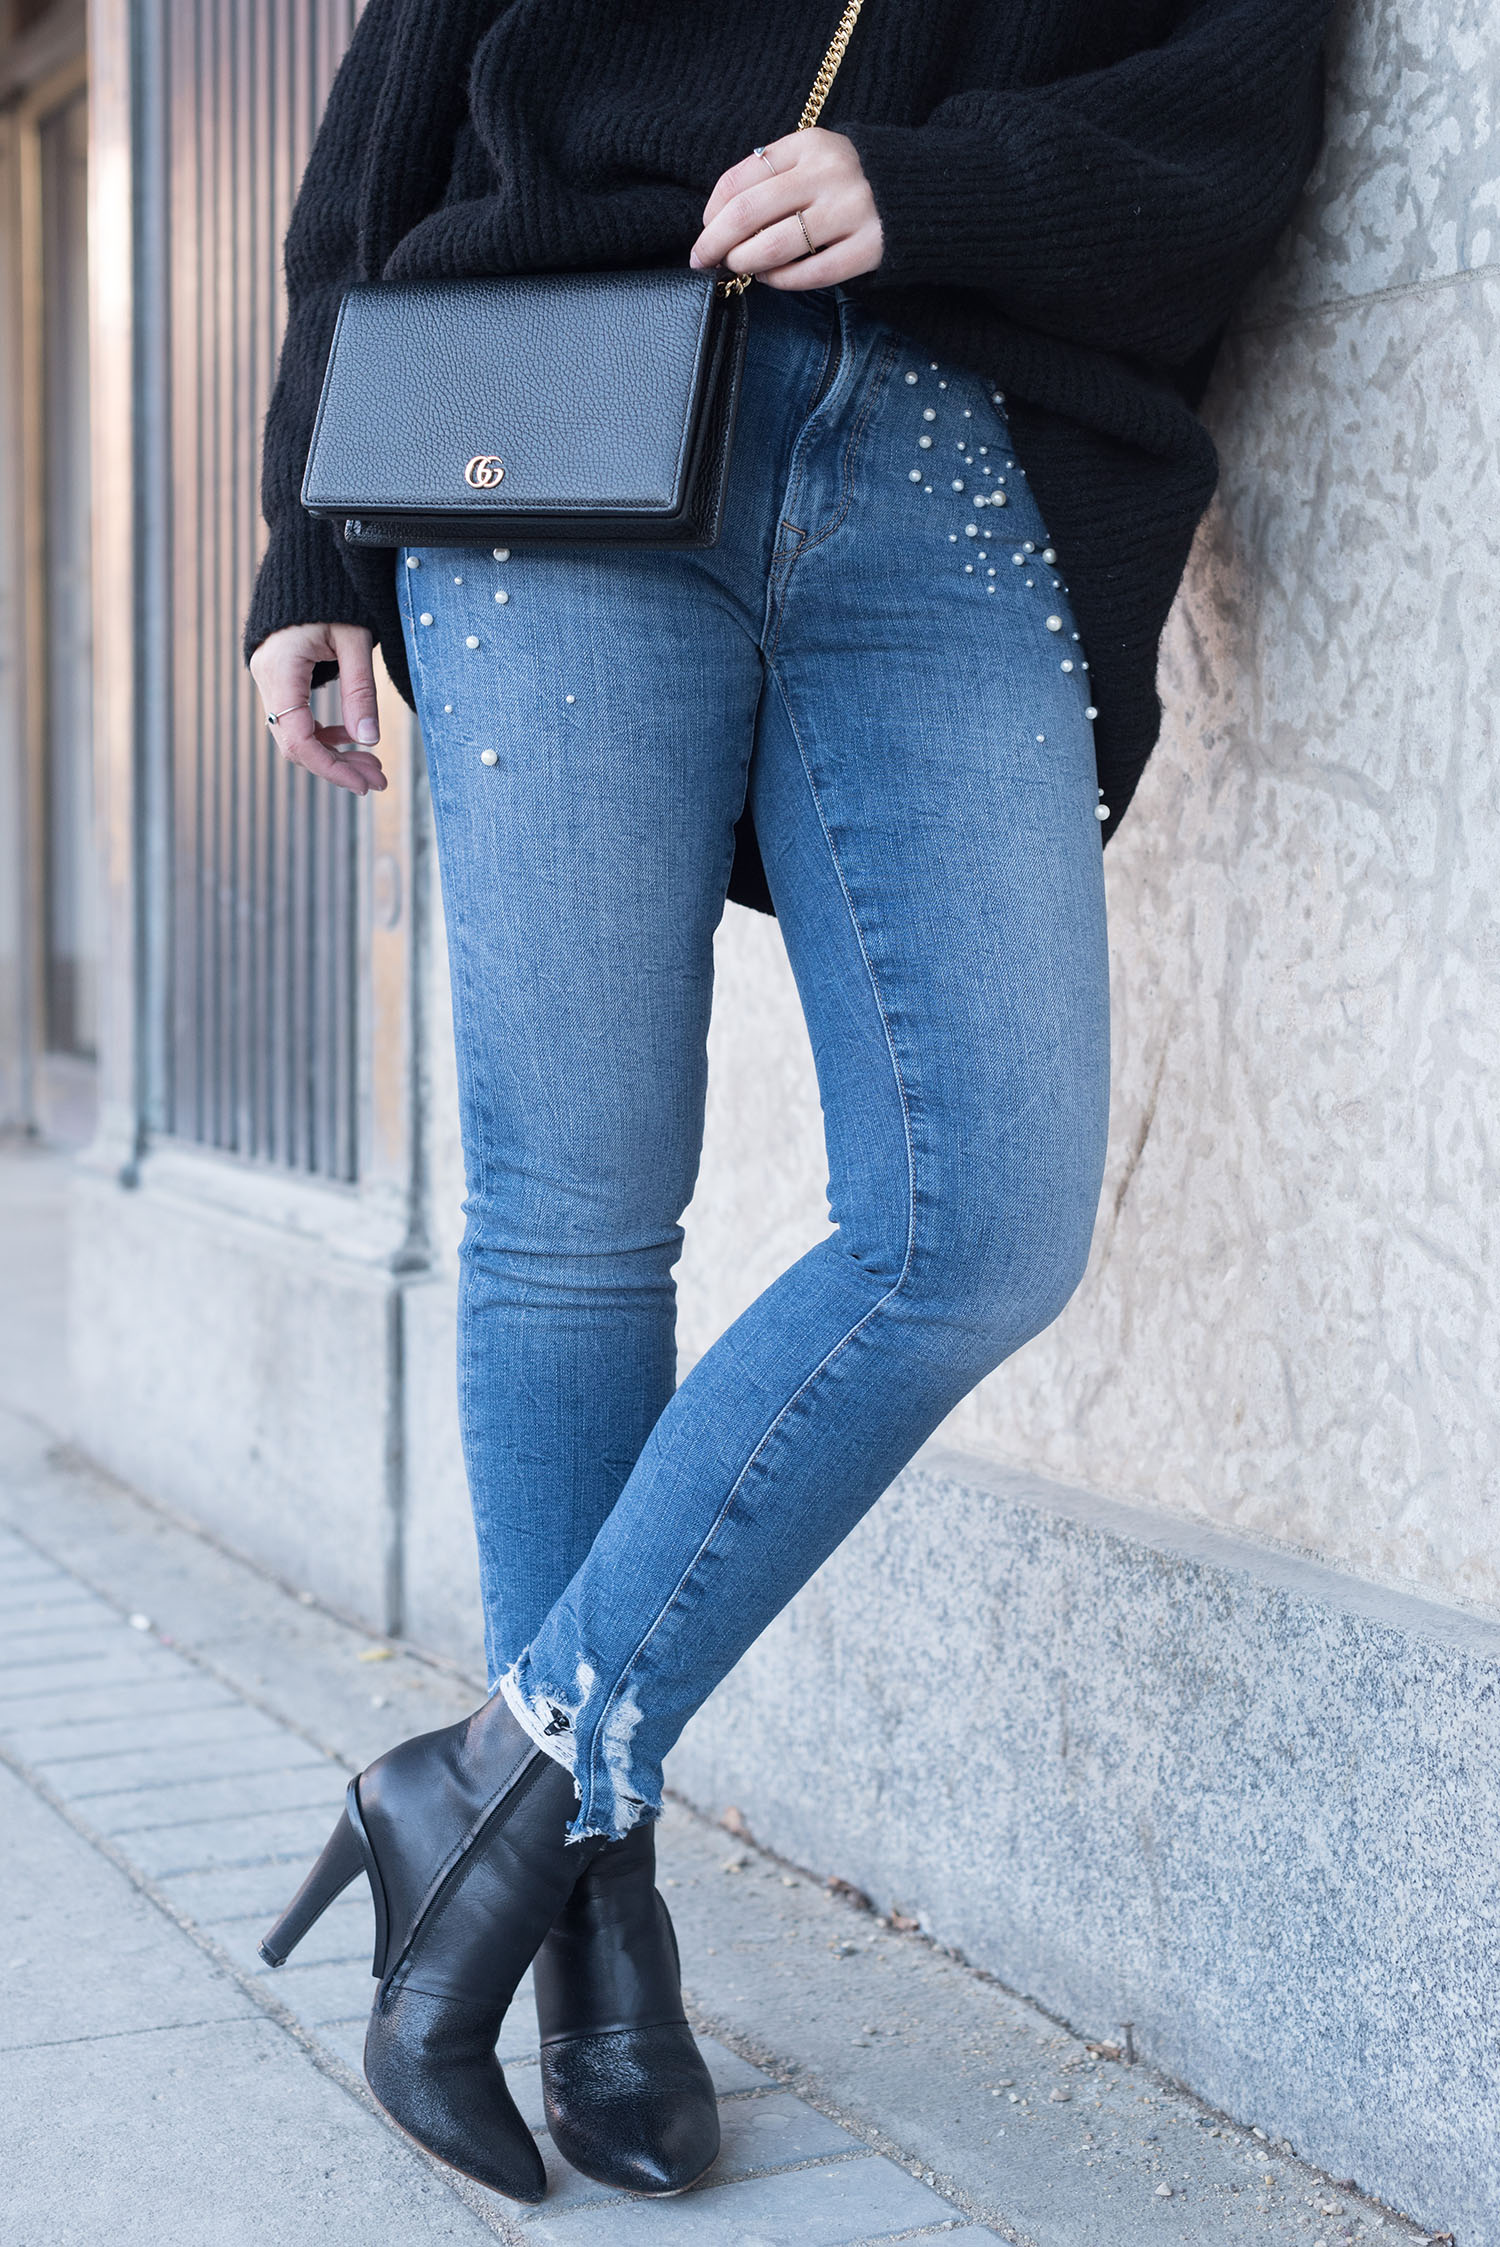 Outfit details on Canadian fashion blogger Cee Fardoe of Coco & Vera, including Mavi pearl-emblazoned jeans and Maison Martin Margiela boots